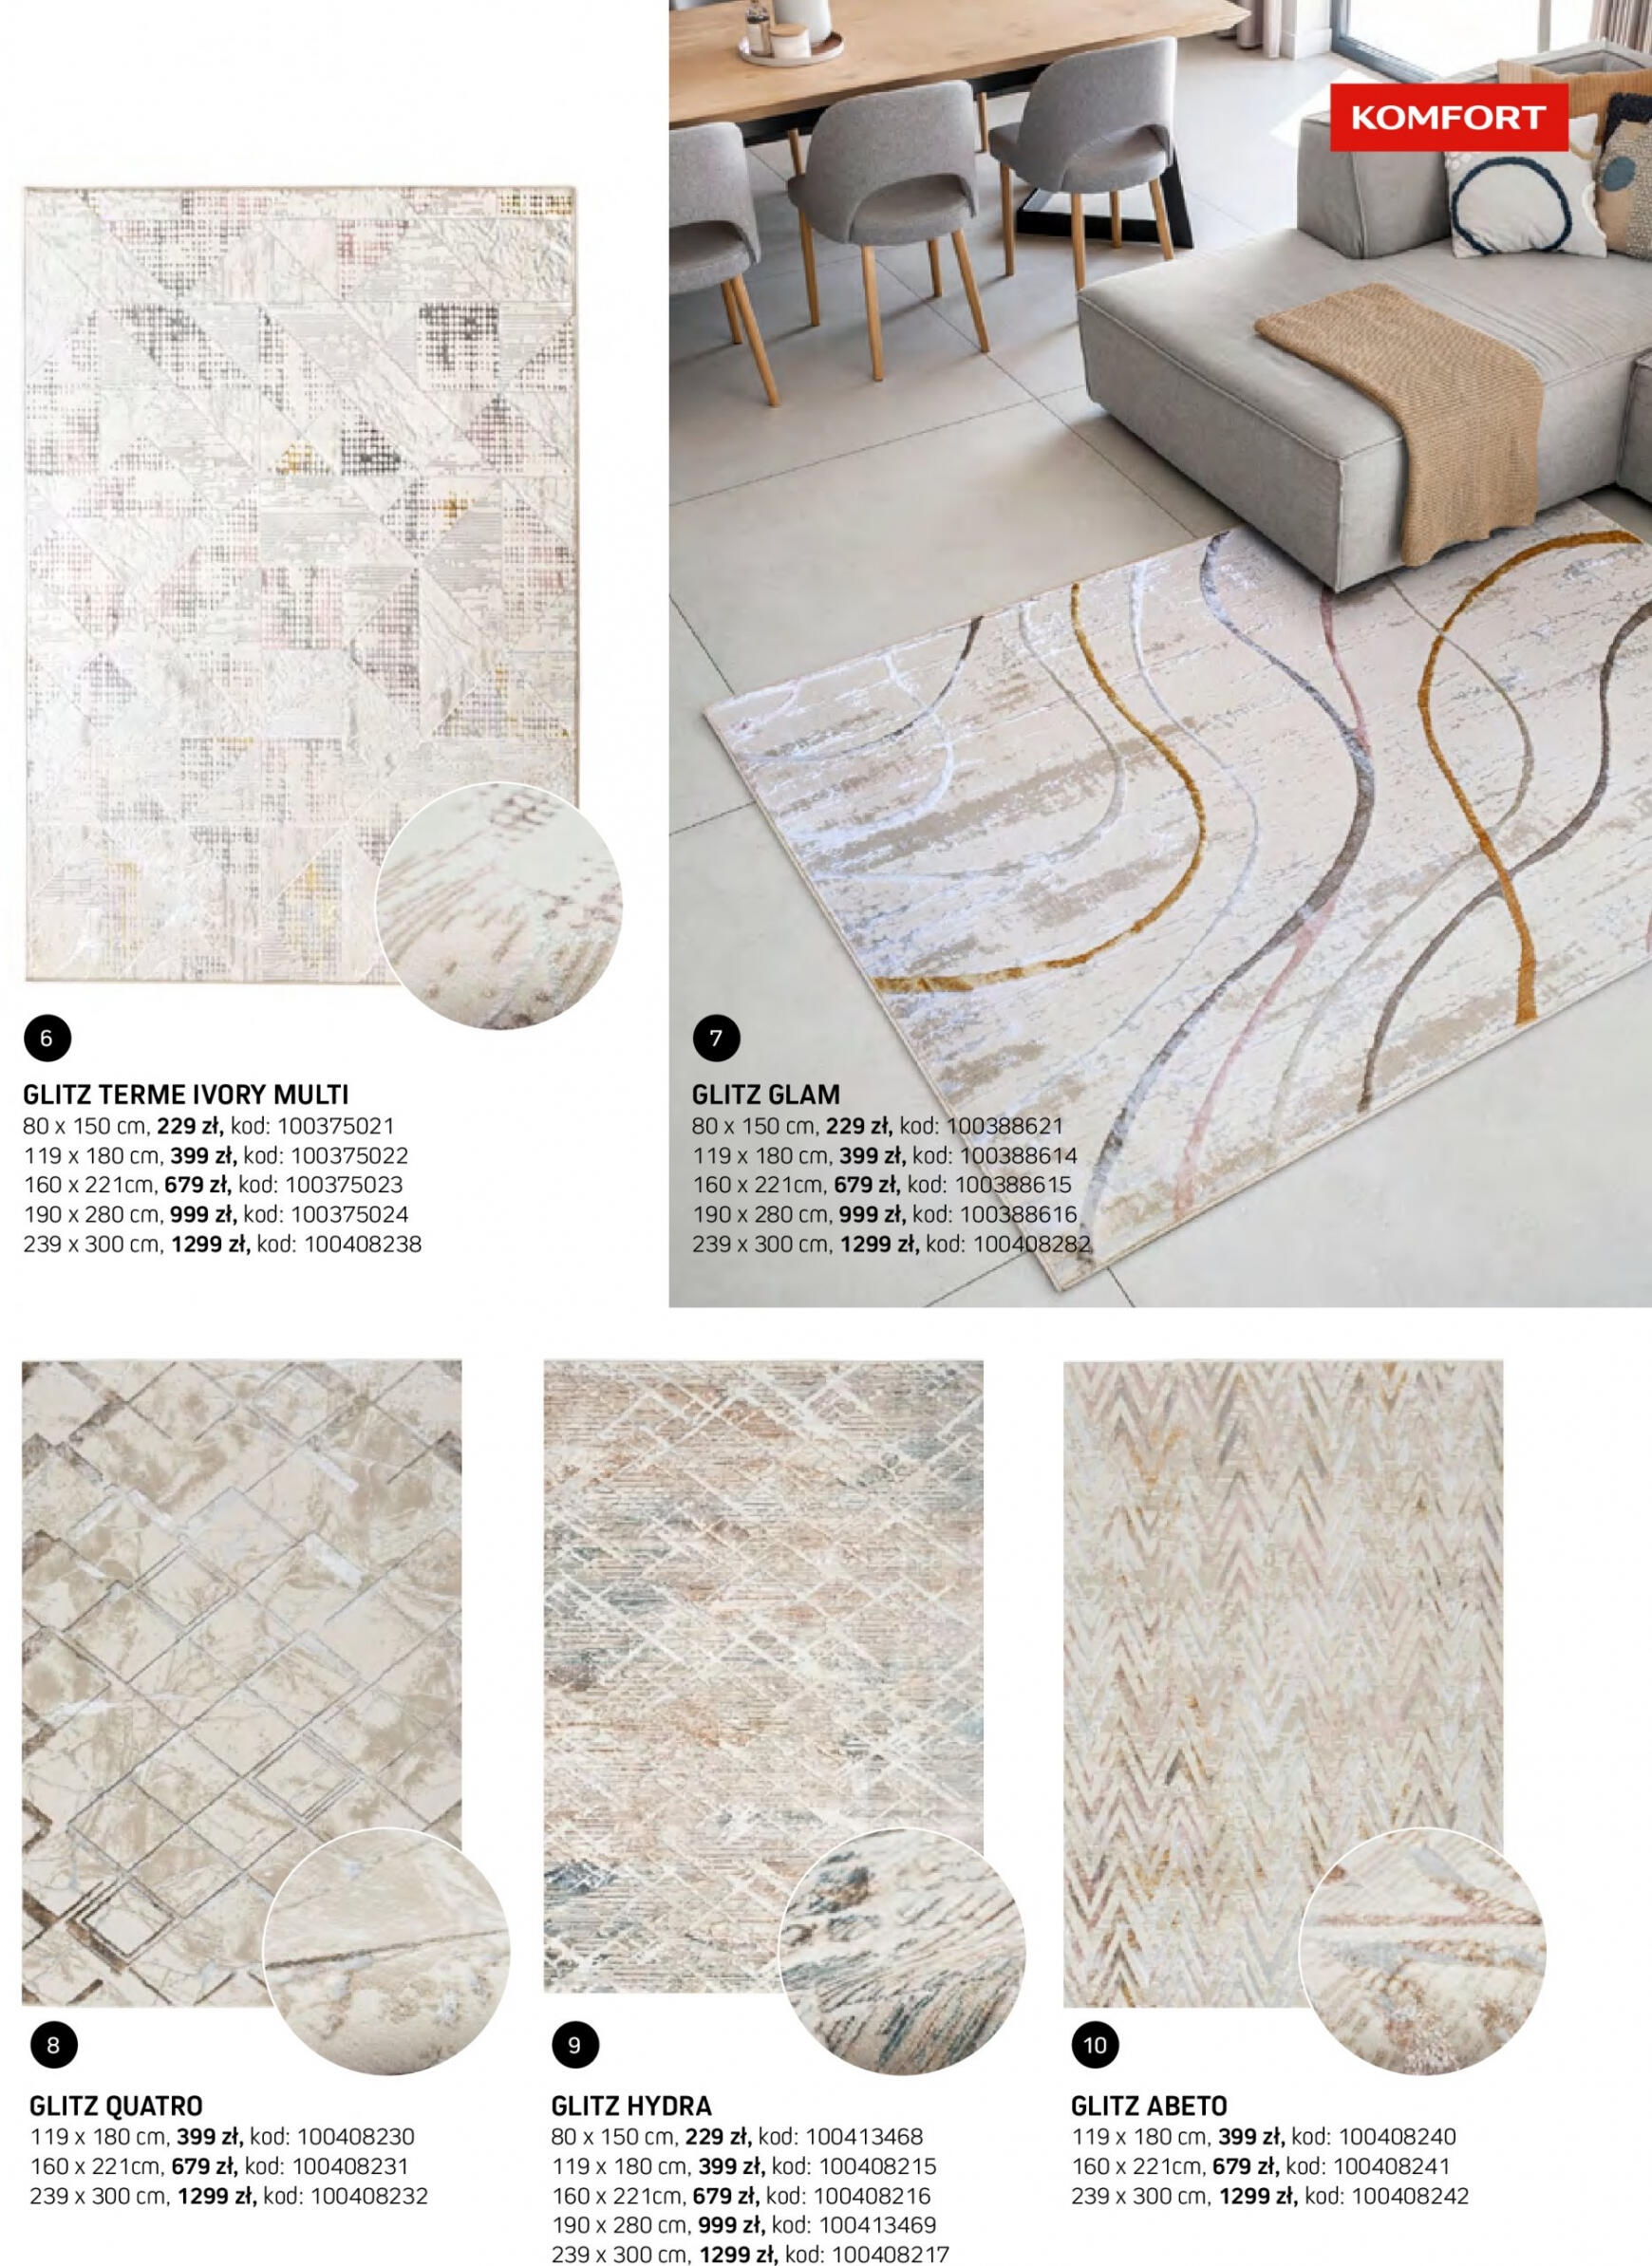 komfort - Komfort - Katalog dywany 2 - page: 25